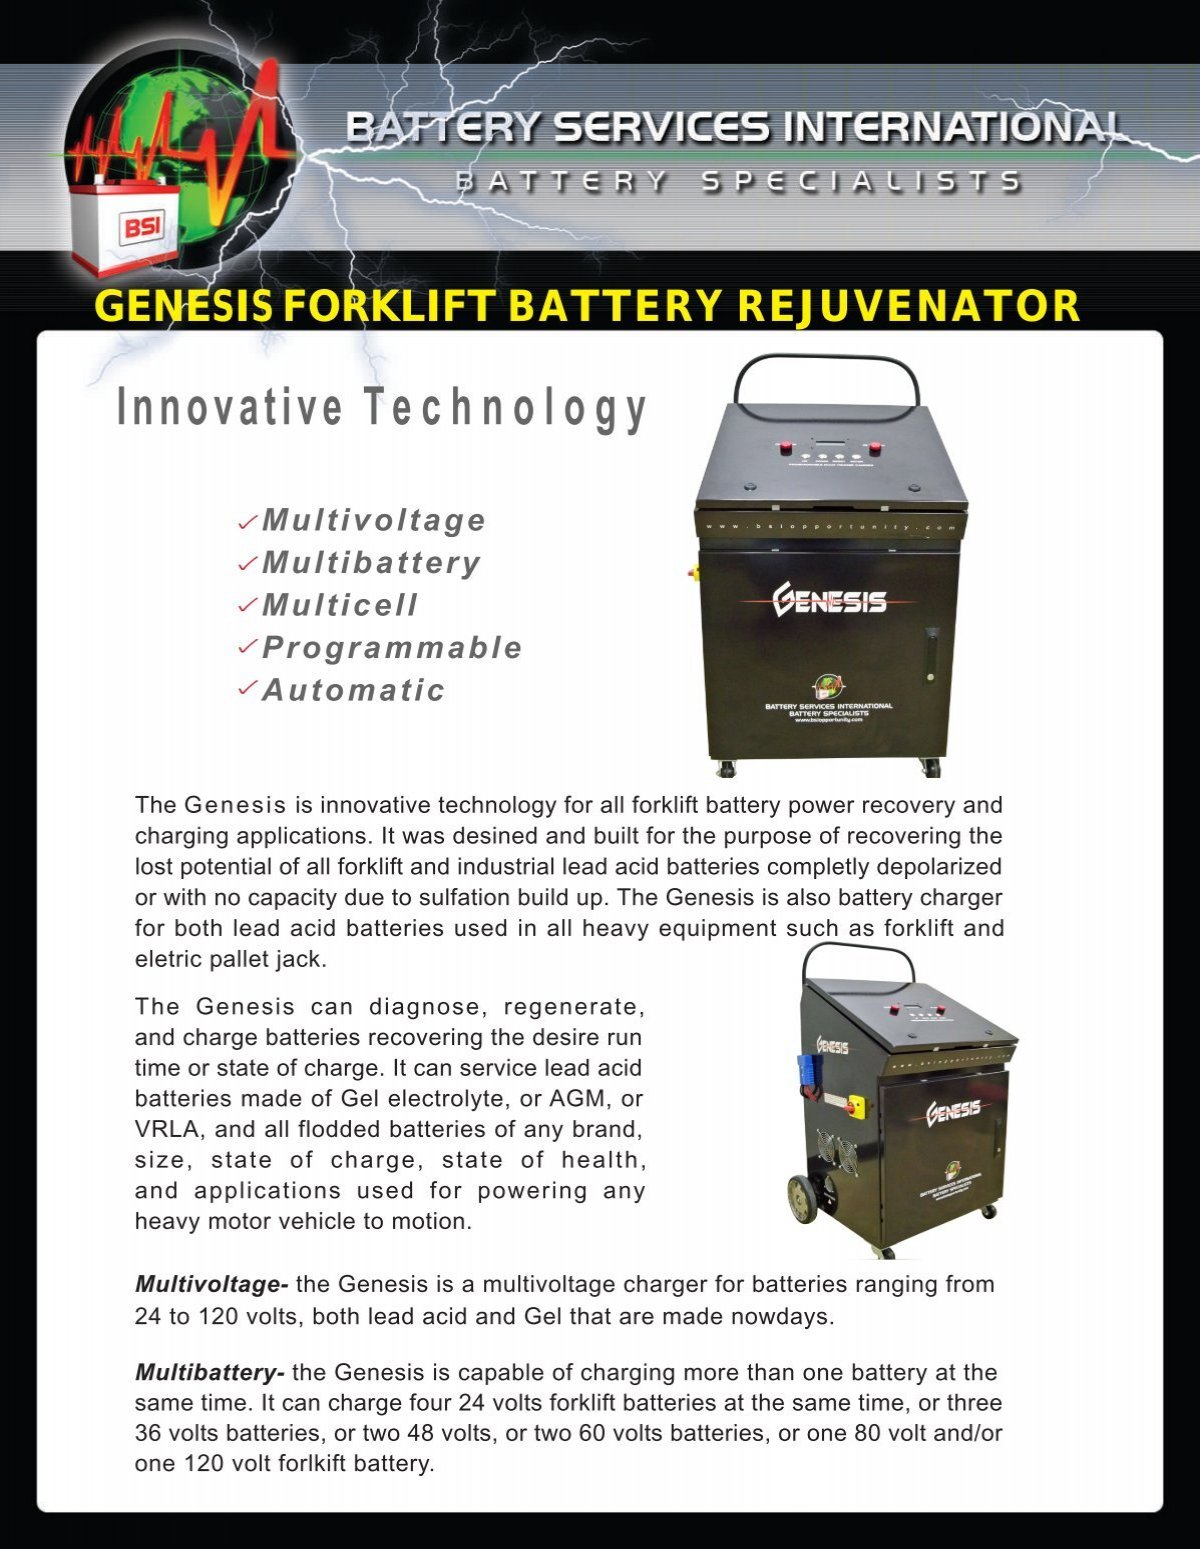 Genesis Forklift Battery Rejuvenator Innovative